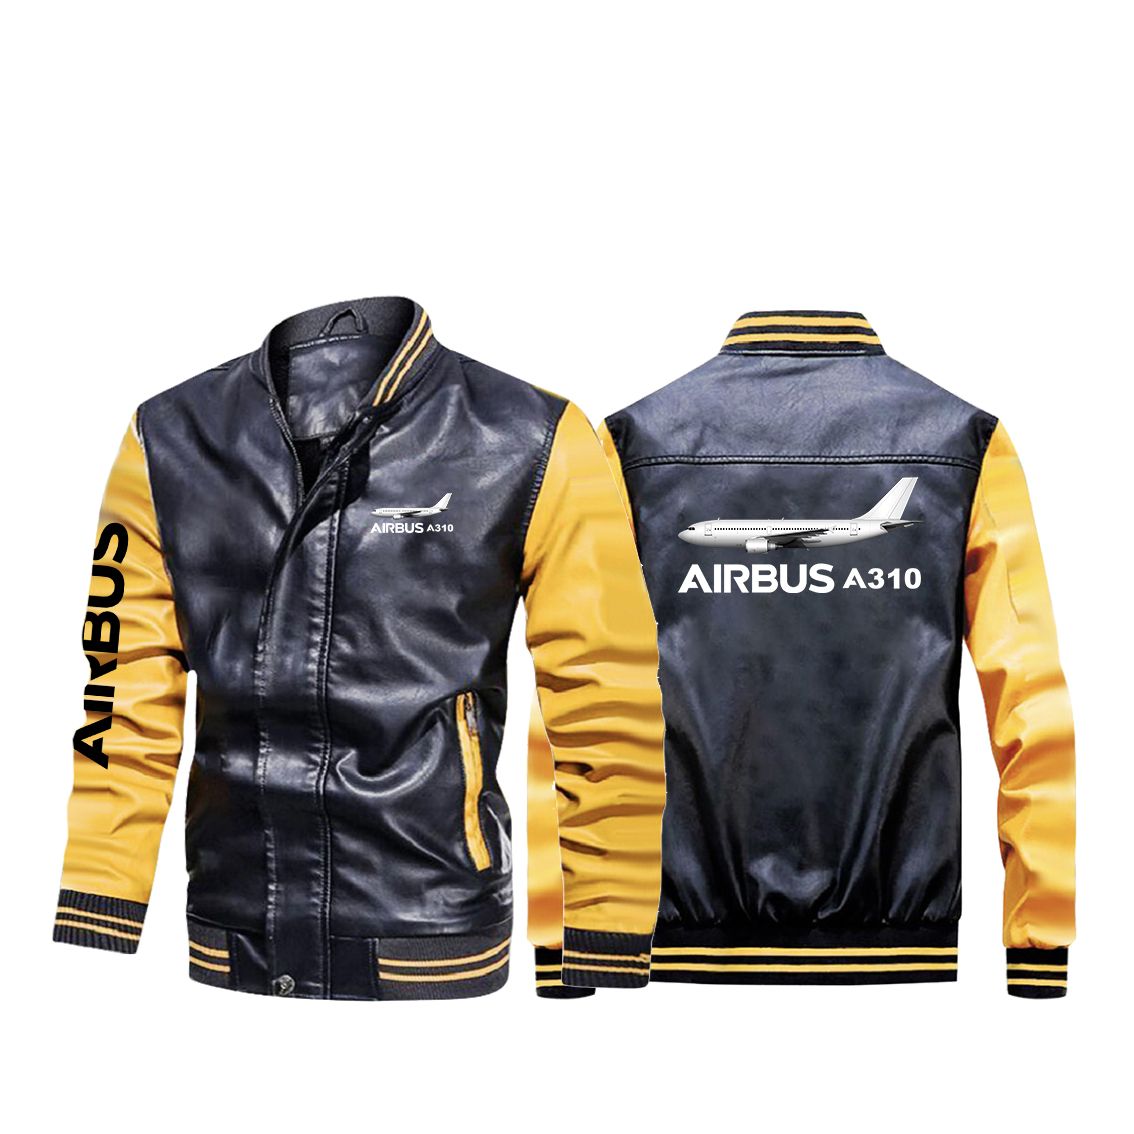 The Airbus A310 Designed Stylish Leather Bomber Jackets